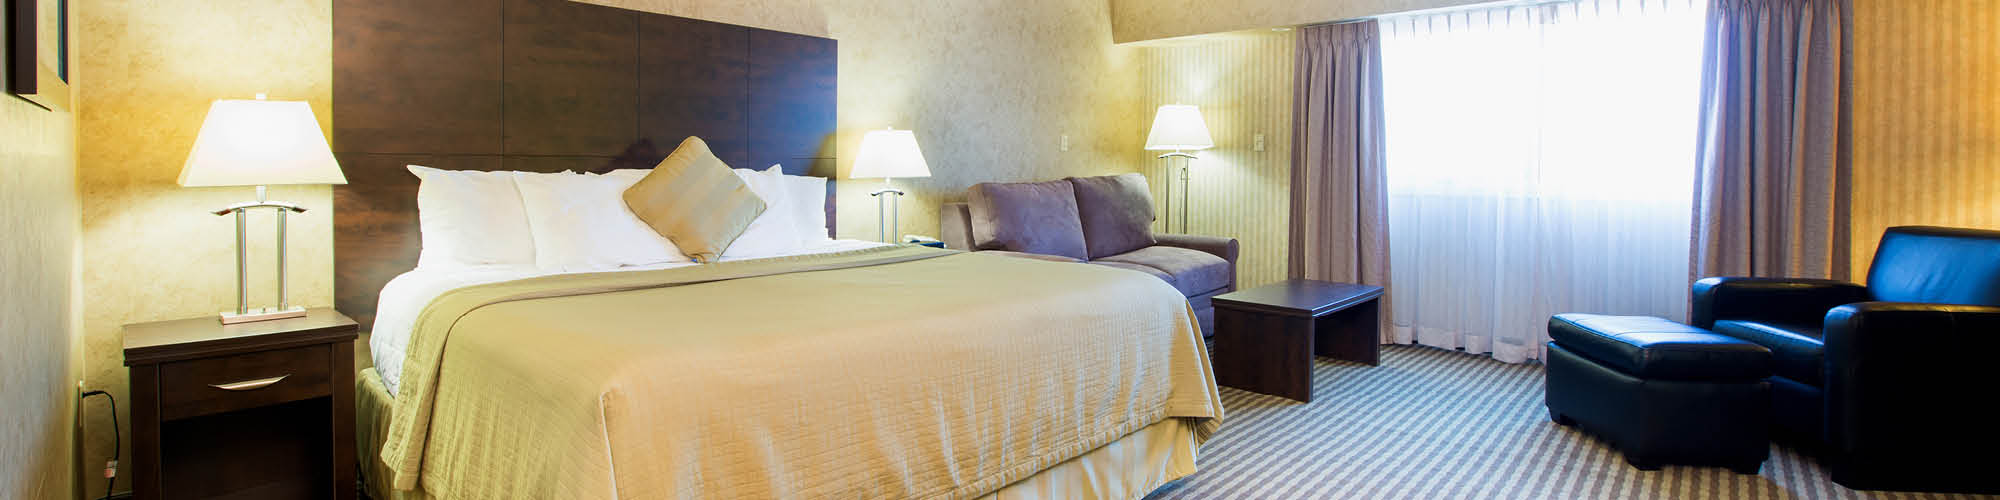 Winnipeg hotel guest room with single queen bed